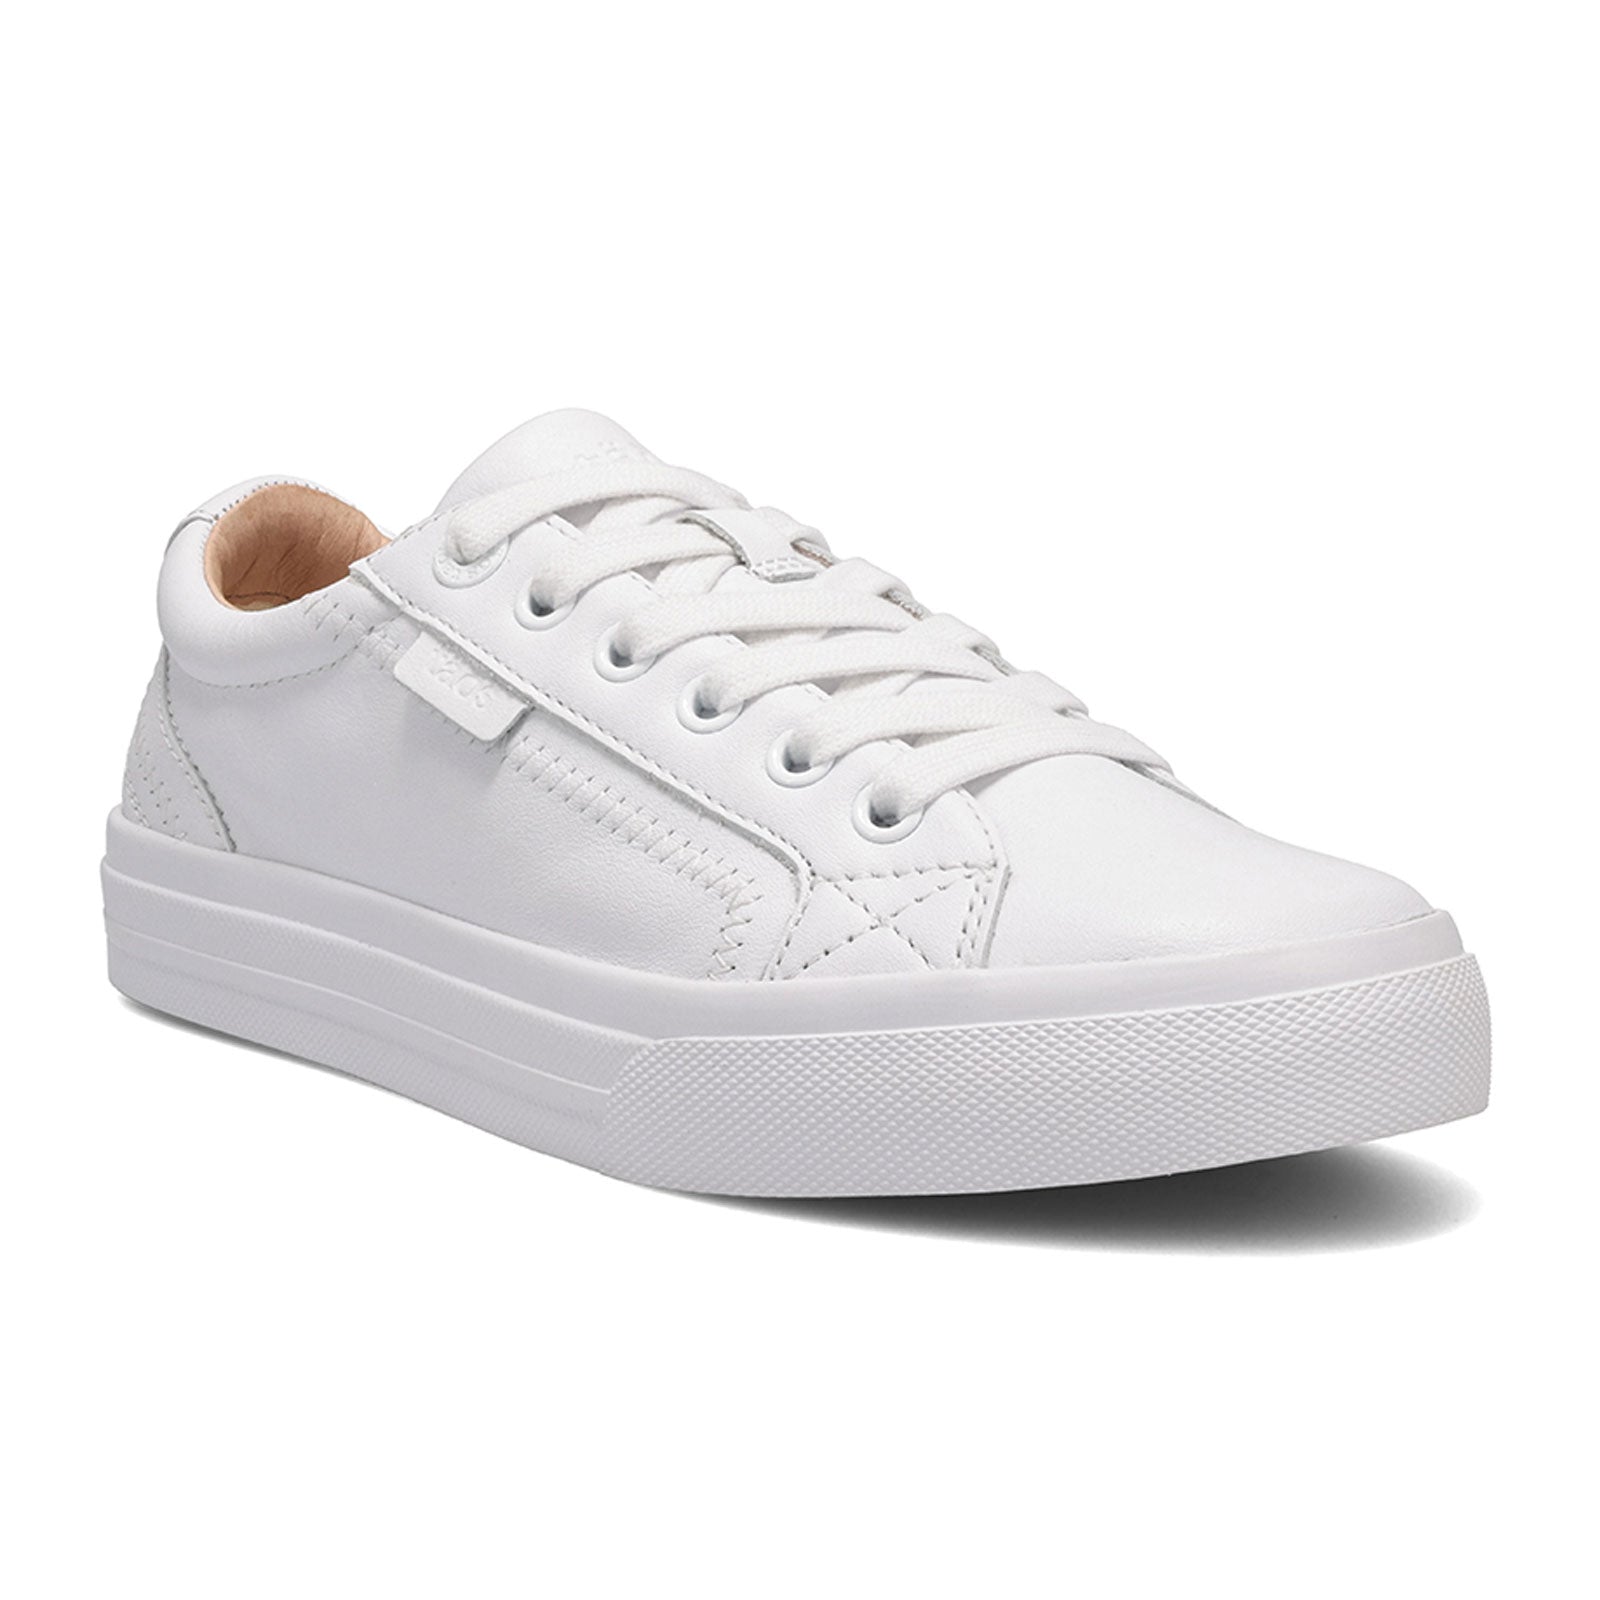 Taos Plim Soul Lux Sneaker (Women) - White Leather Dress-Casual - Lace Ups - The Heel Shoe Fitters